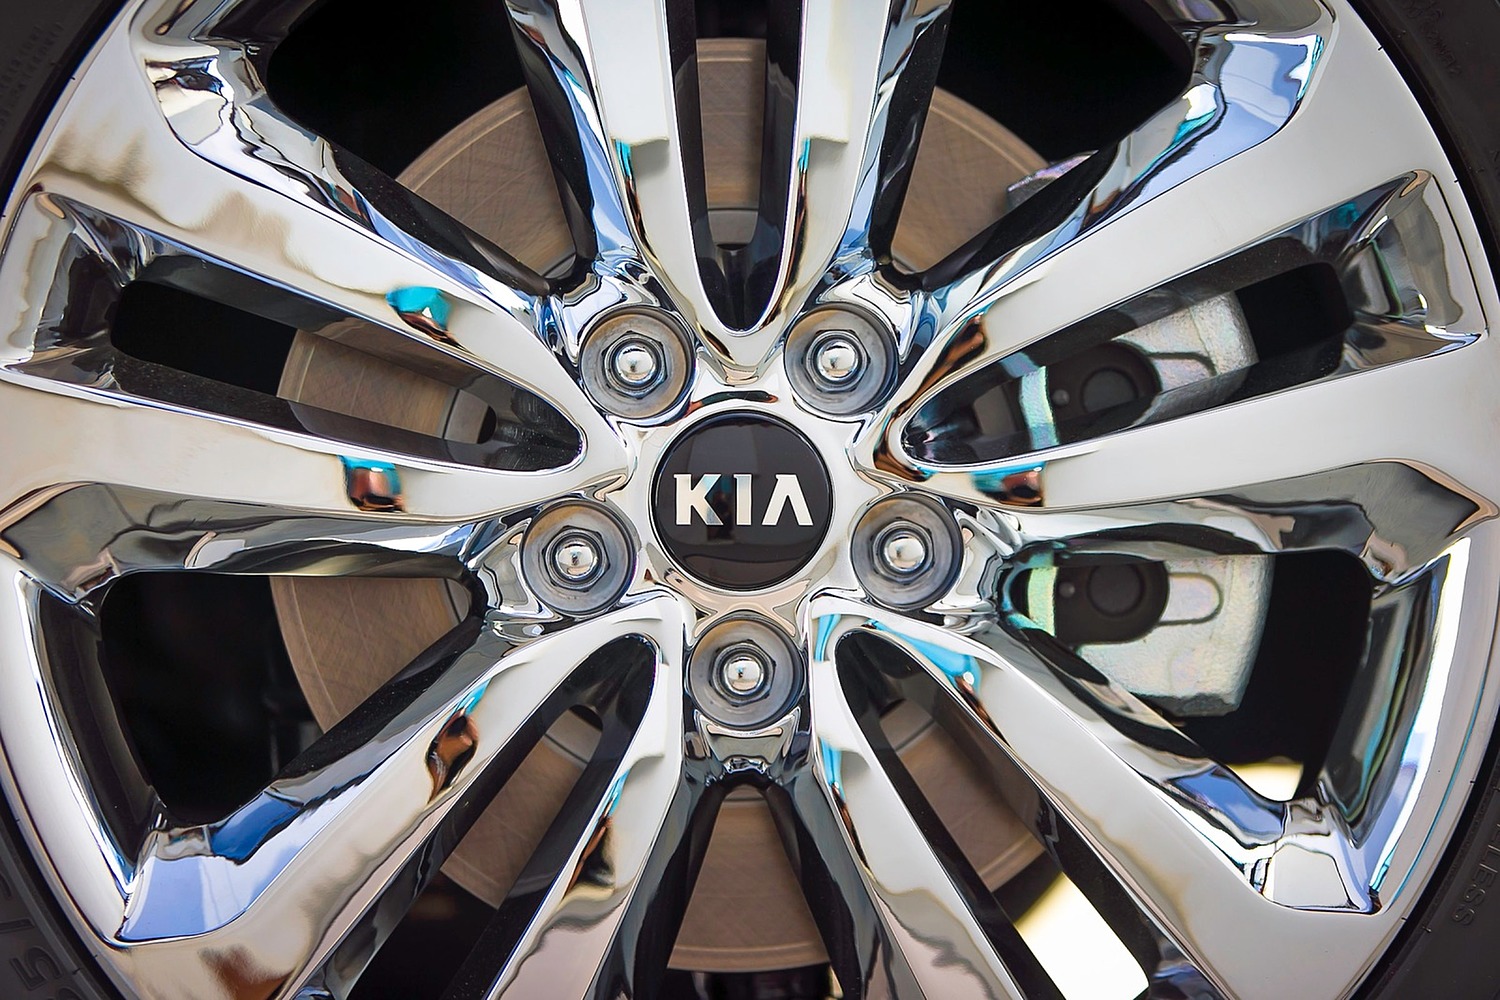 Kia Sedona SX Limited Passenger Minivan Wheel (2016 model year shown)